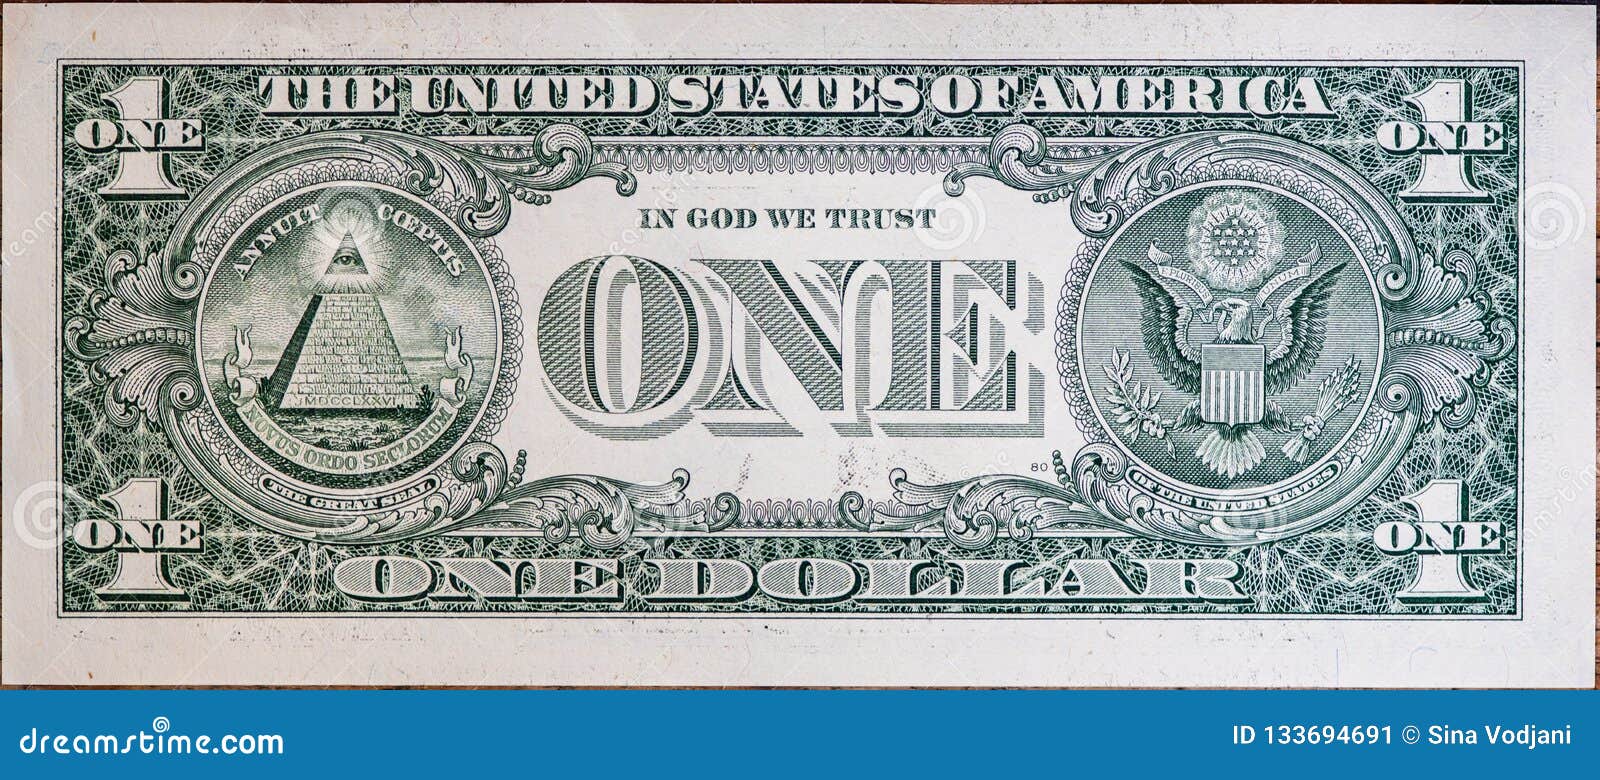 one dollar bill closeup view